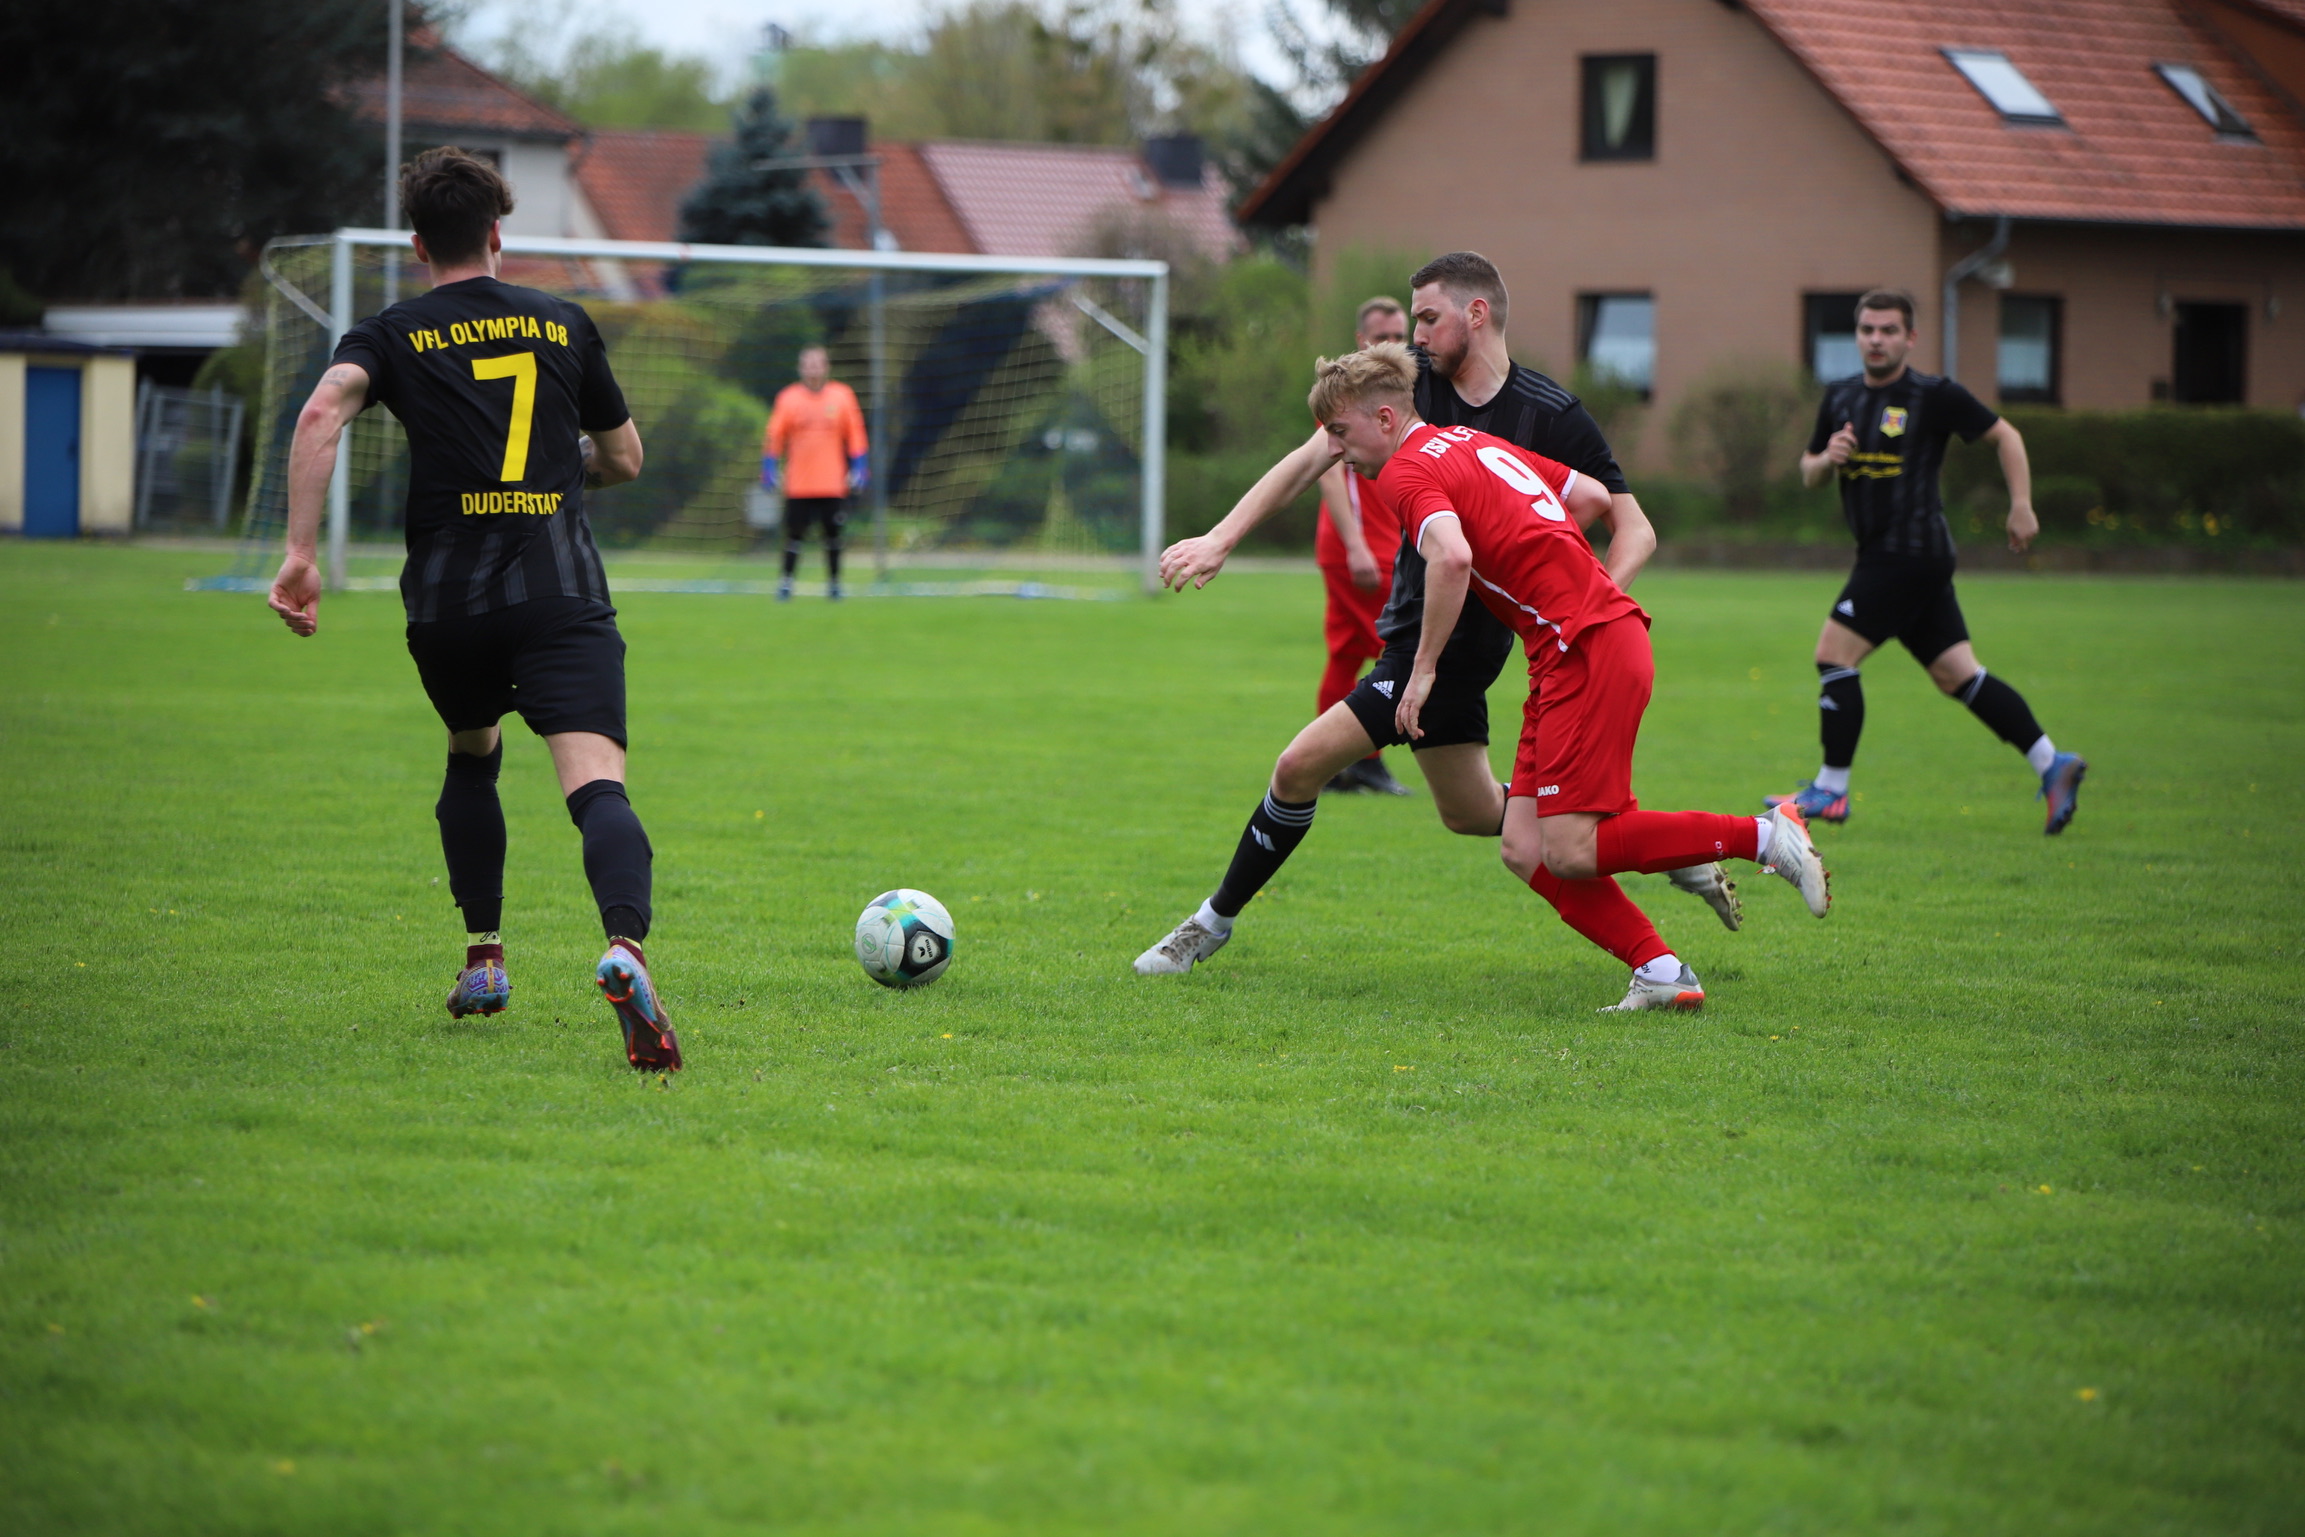 Spielbericht – VfL Oly. 08 Duderstadt v TSV Eintracht Wulften – 1:0